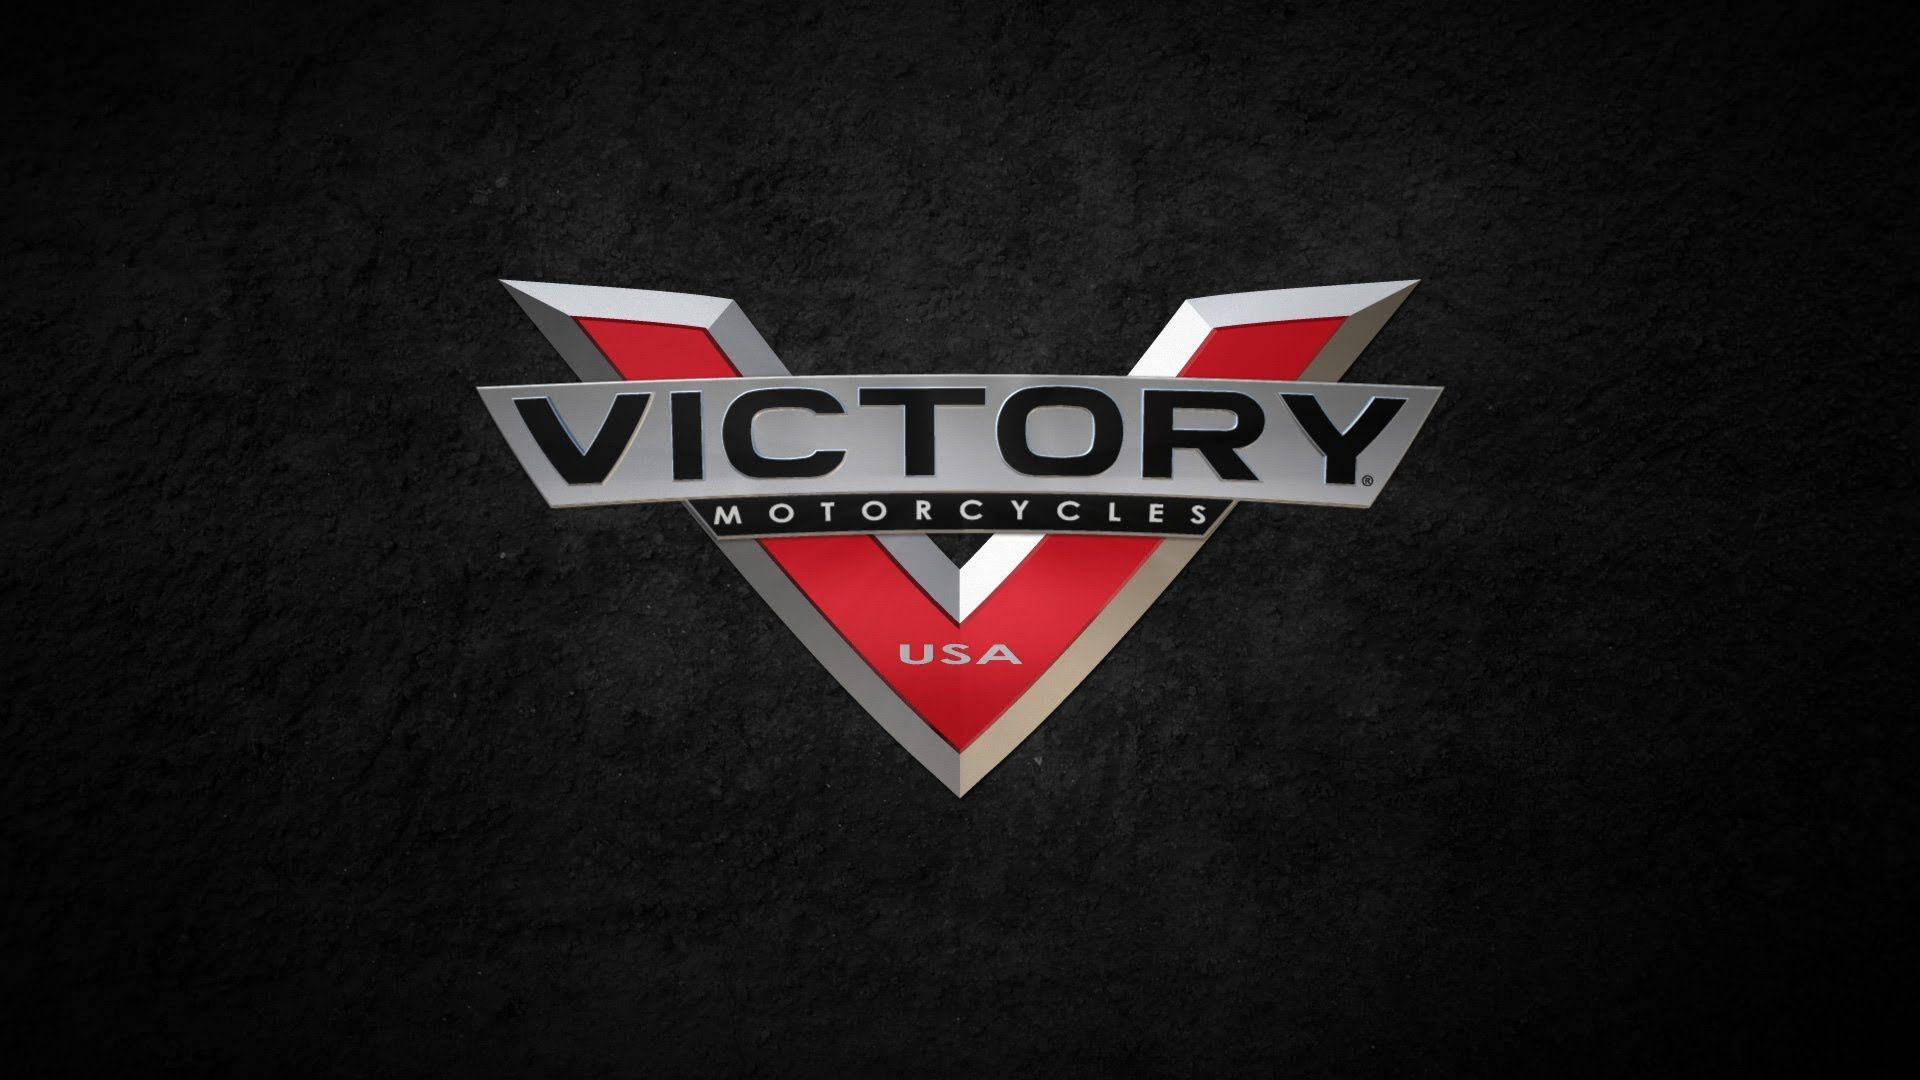 Victory success system logo | Logo design contest | 99designs